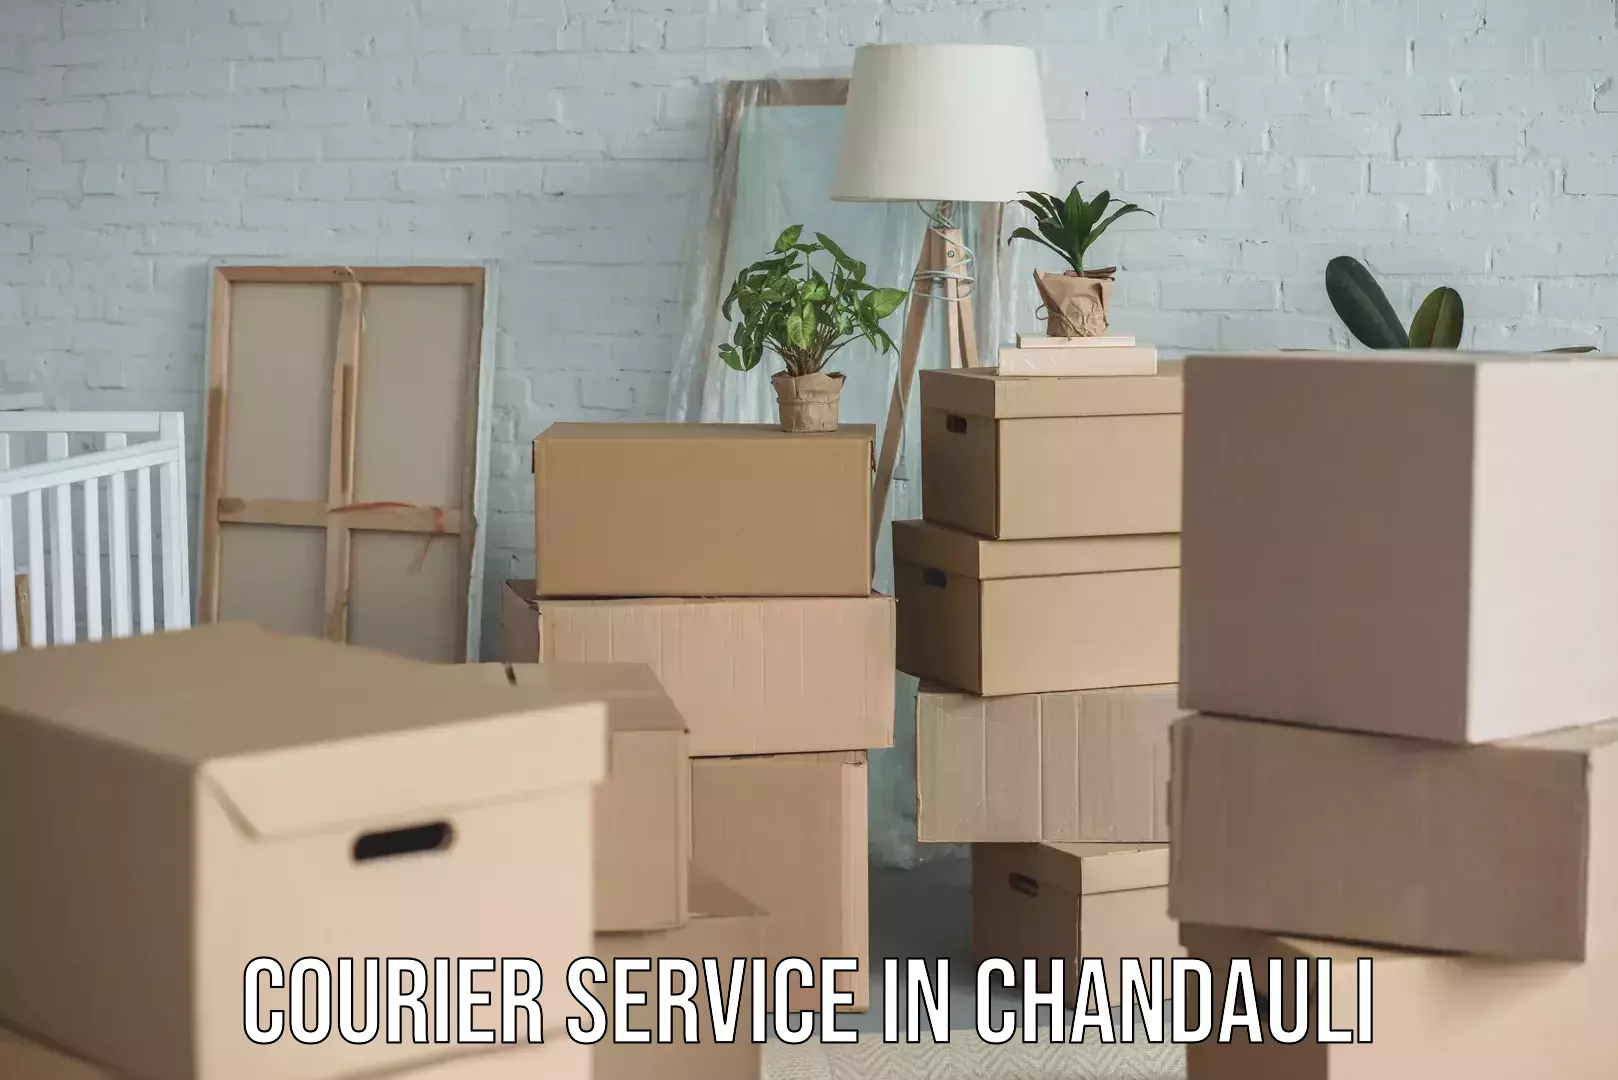 Express courier capabilities in Chandauli